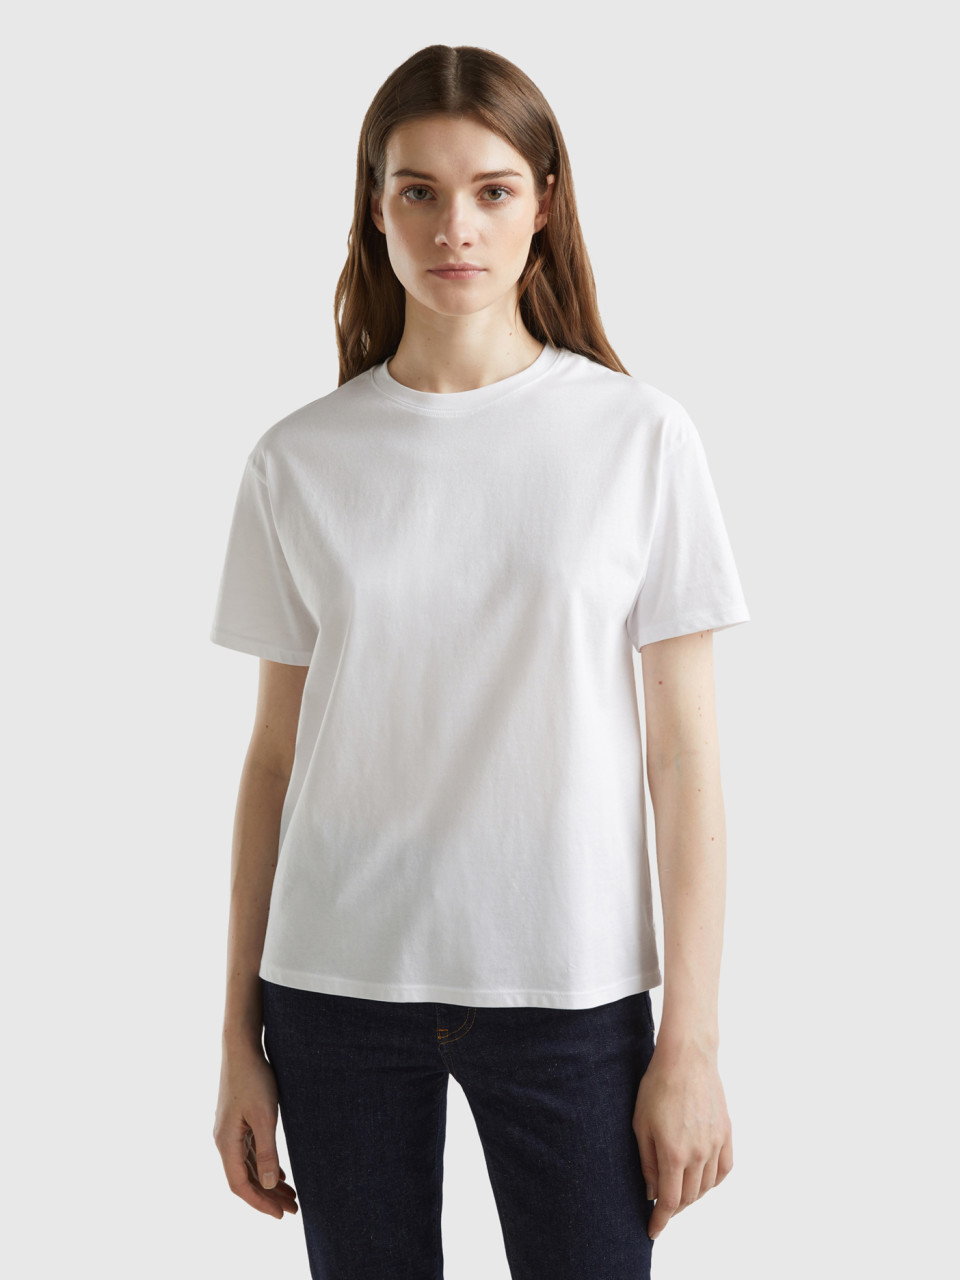 Benetton, Short Sleeve 100% Cotton T-shirt, White, Women